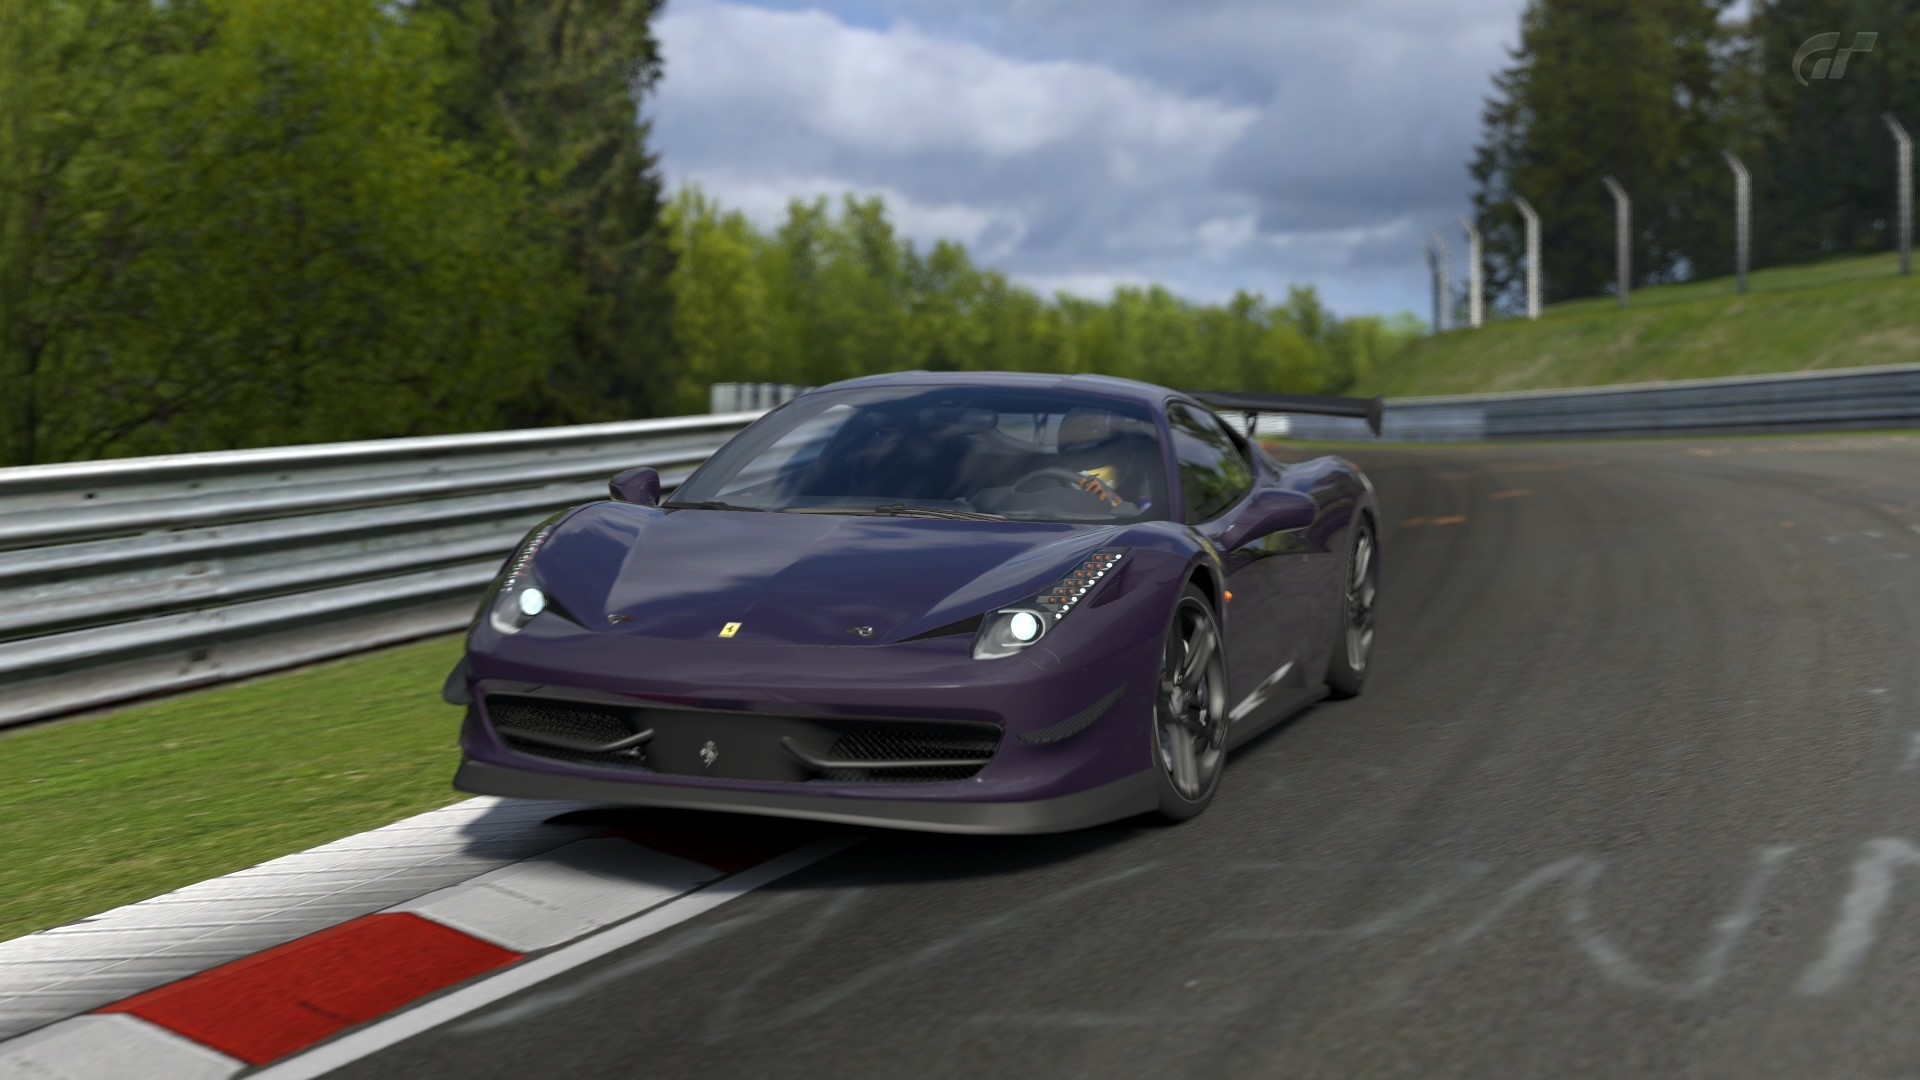 General 1920x1080 Ferrari car video games racing race tracks Gran Turismo Gran Turismo 5 Ferrari 458 vehicle purple cars